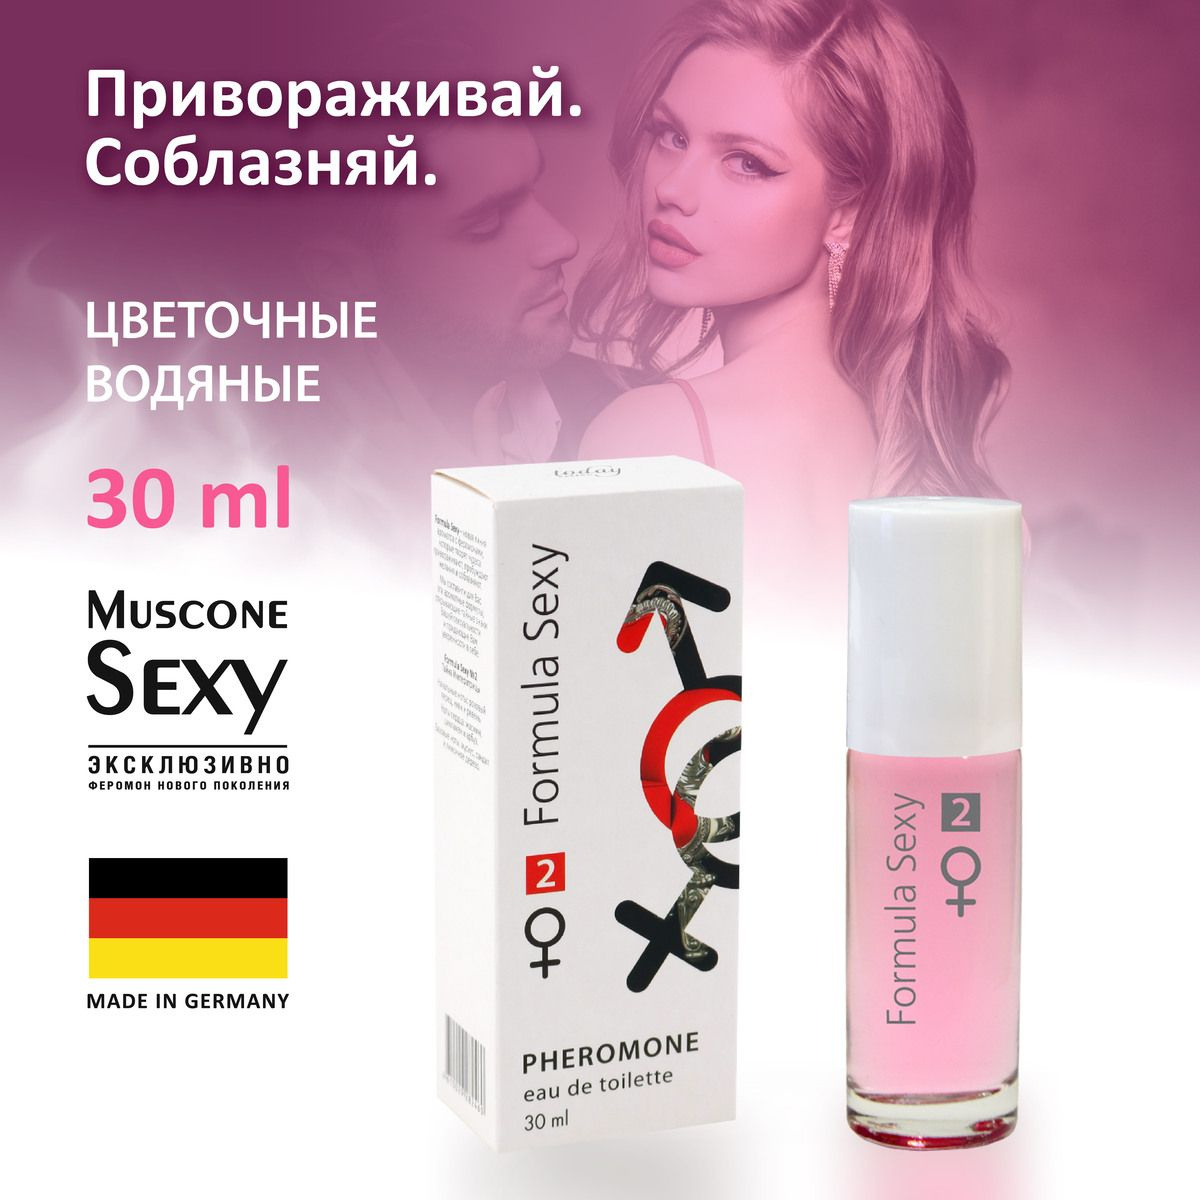 https://www.ozon.ru/product/tualetnaya-voda-zhenskaya-formula-sexy-2-s-feromonami-30-ml-954916262/